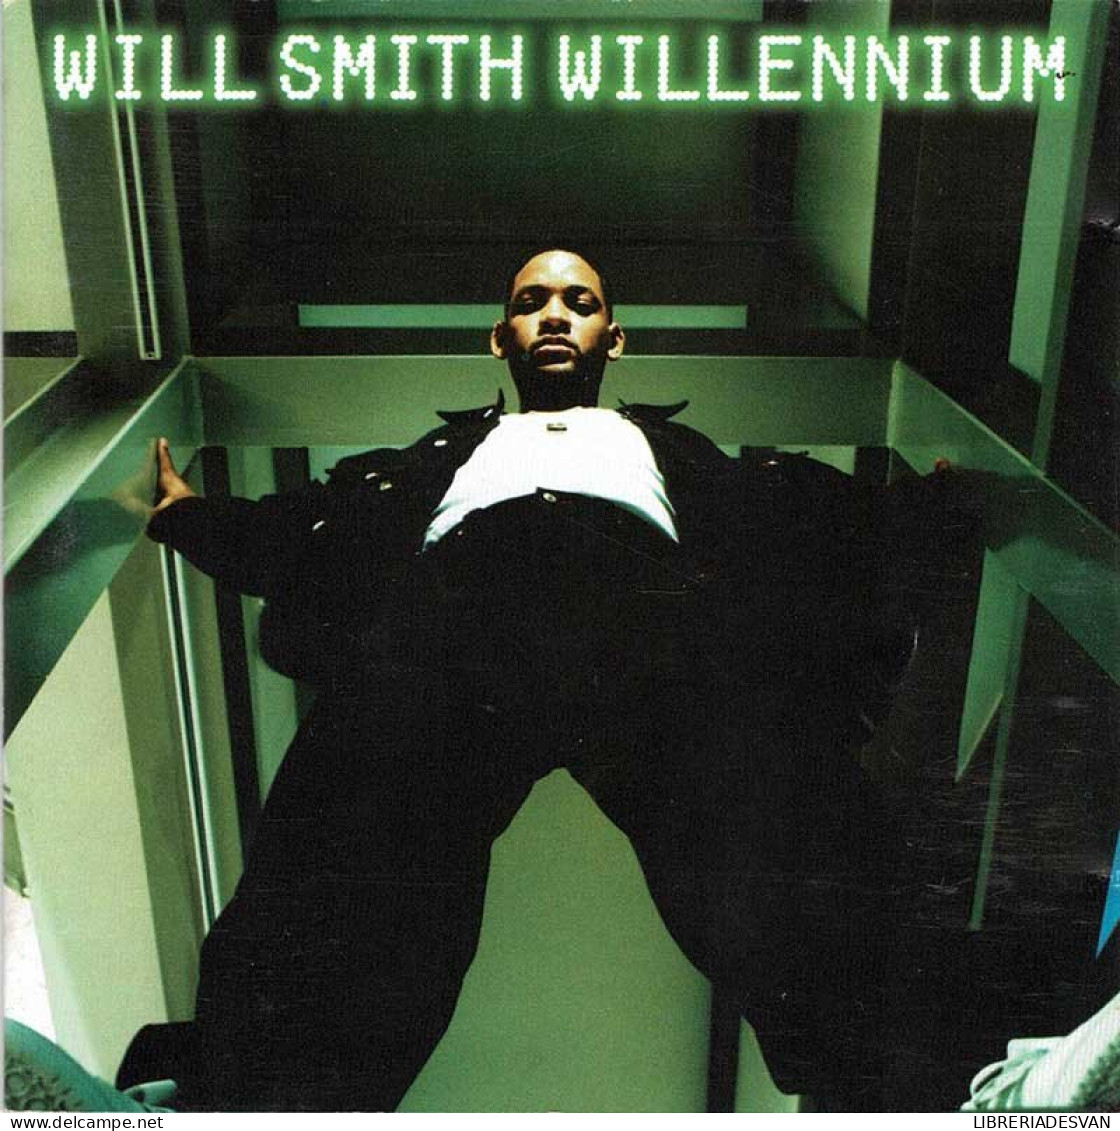 Will Smith - Willennium. CD - Rap En Hip Hop